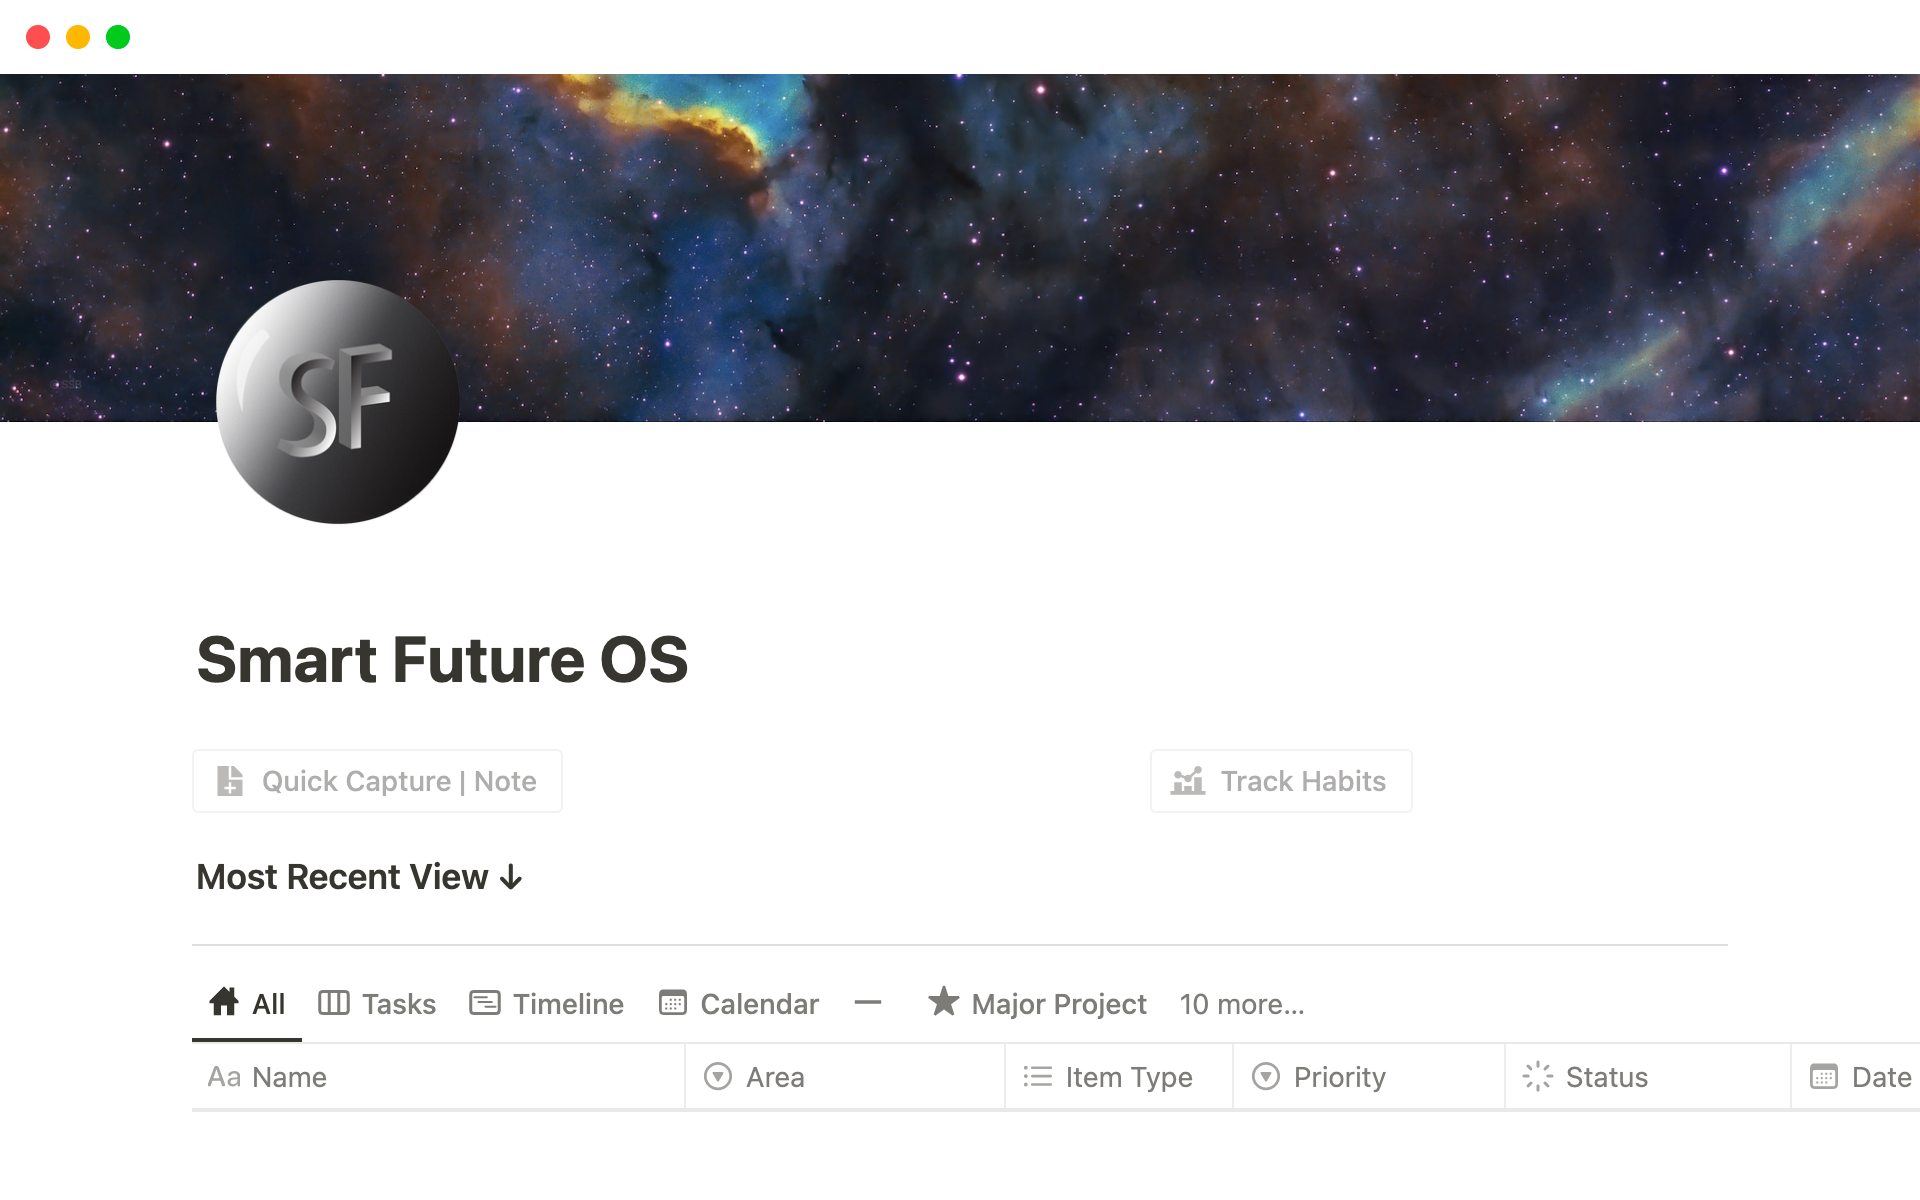 Vista previa de una plantilla para Smart Future OS